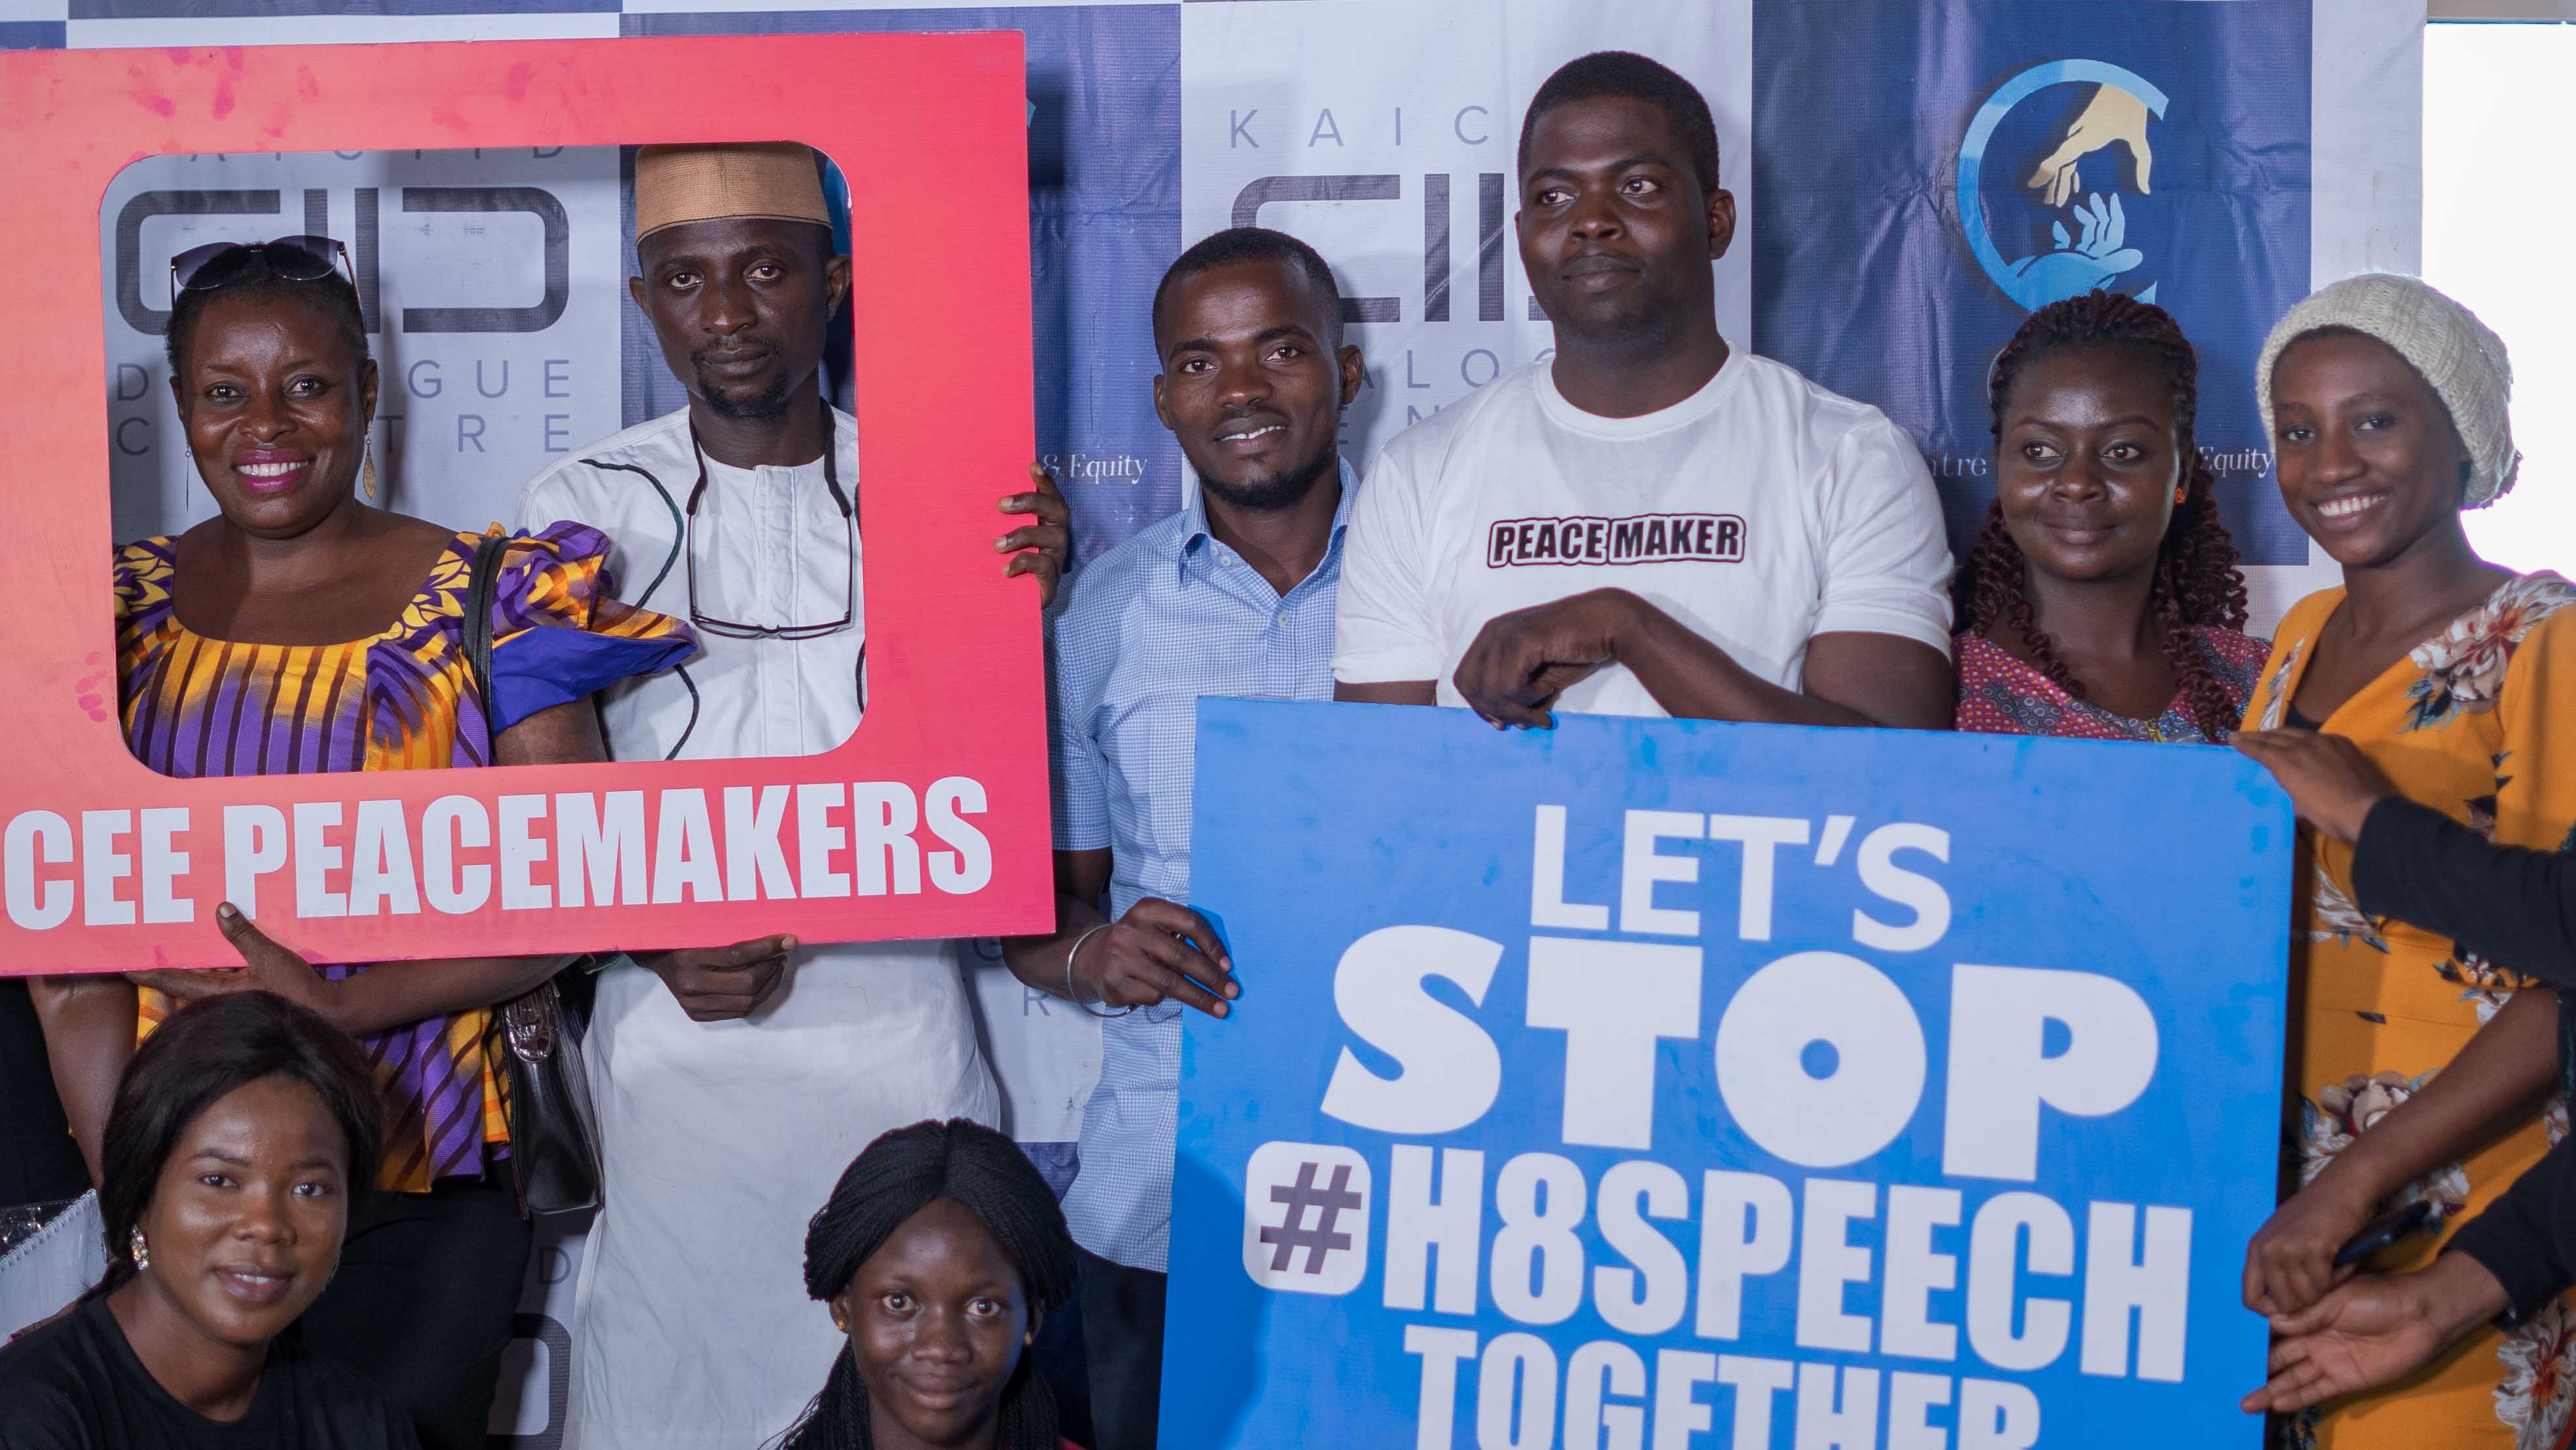 شباب يطلقون مشروع بناء سلام افتراضيًّا في نيجيريا